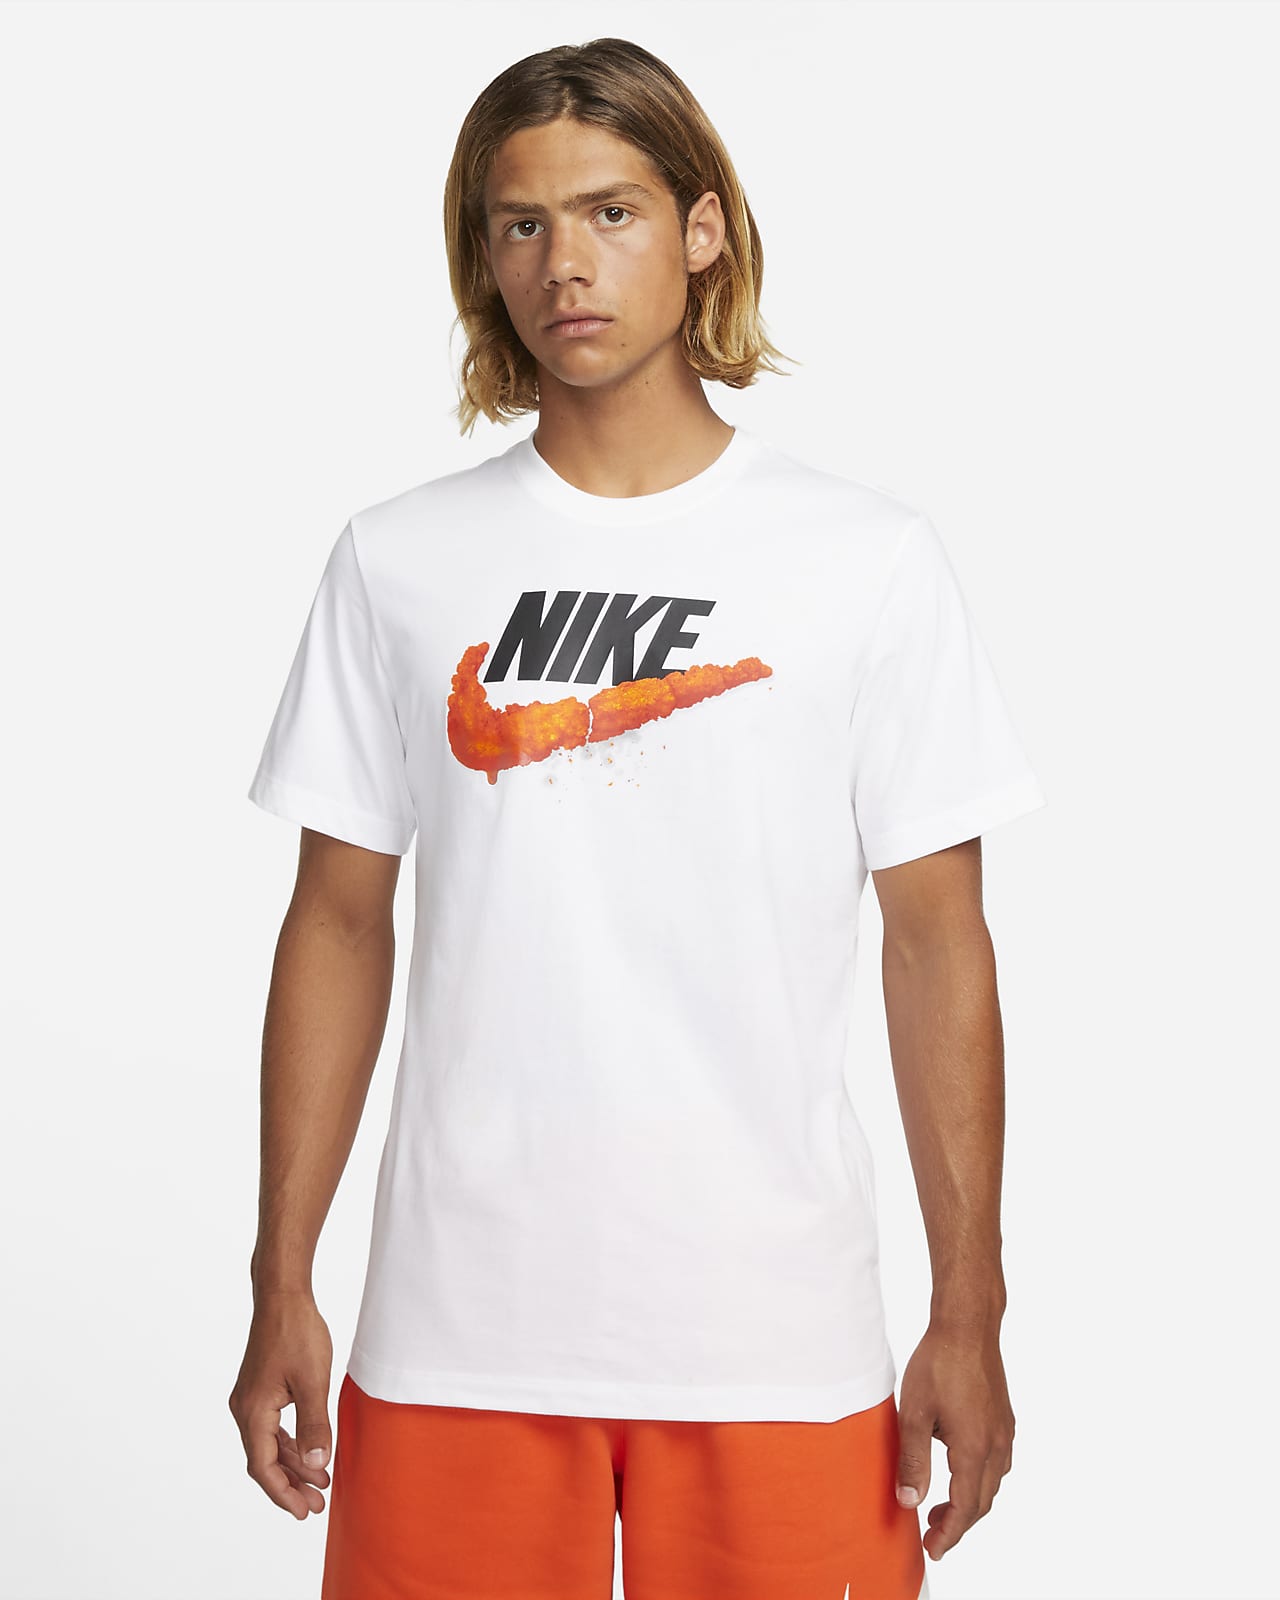 Nike Futura Dot Pocket T Shirt ~ Rhinestone Biz Blog